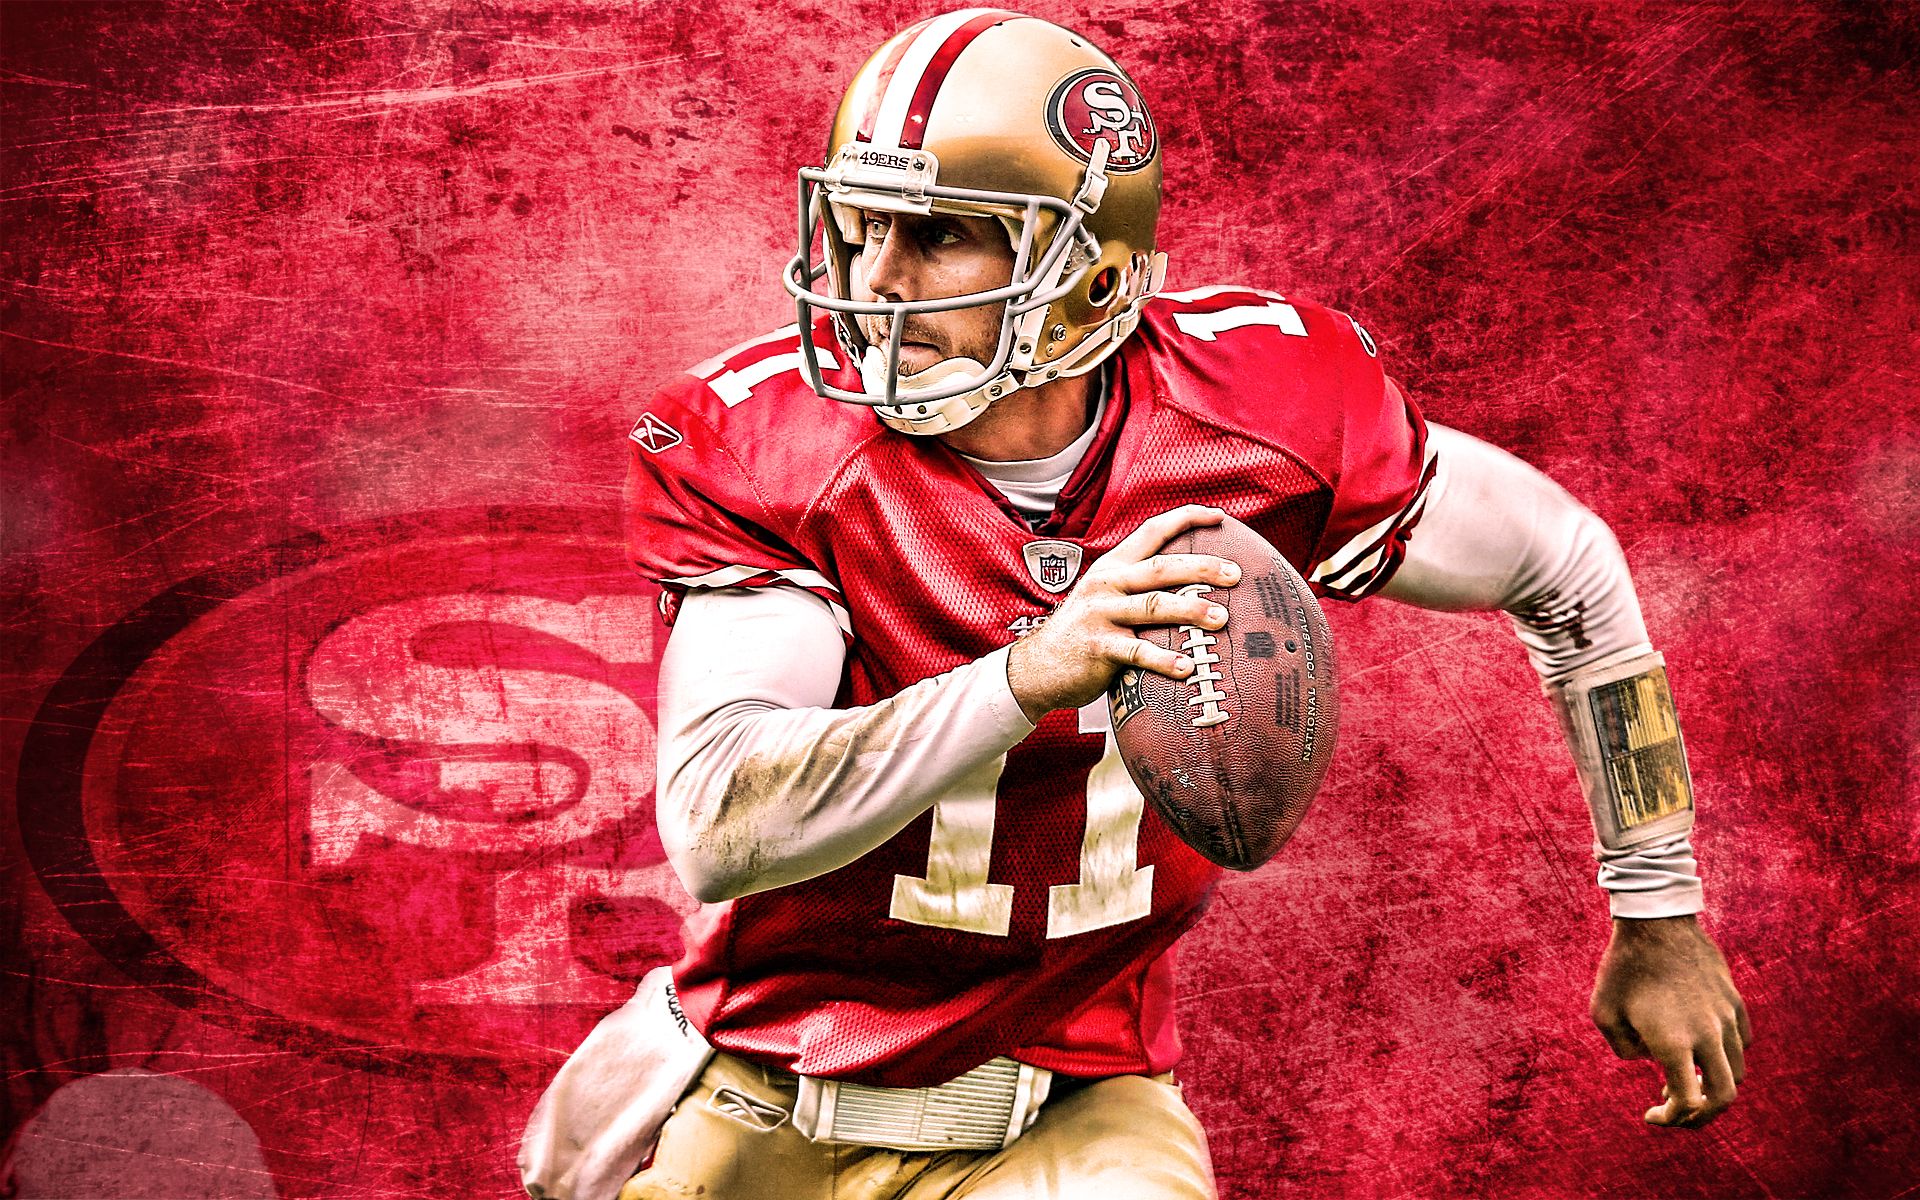 NFL Football Player San Francisco 49ers wallpaper HD. Free desktop